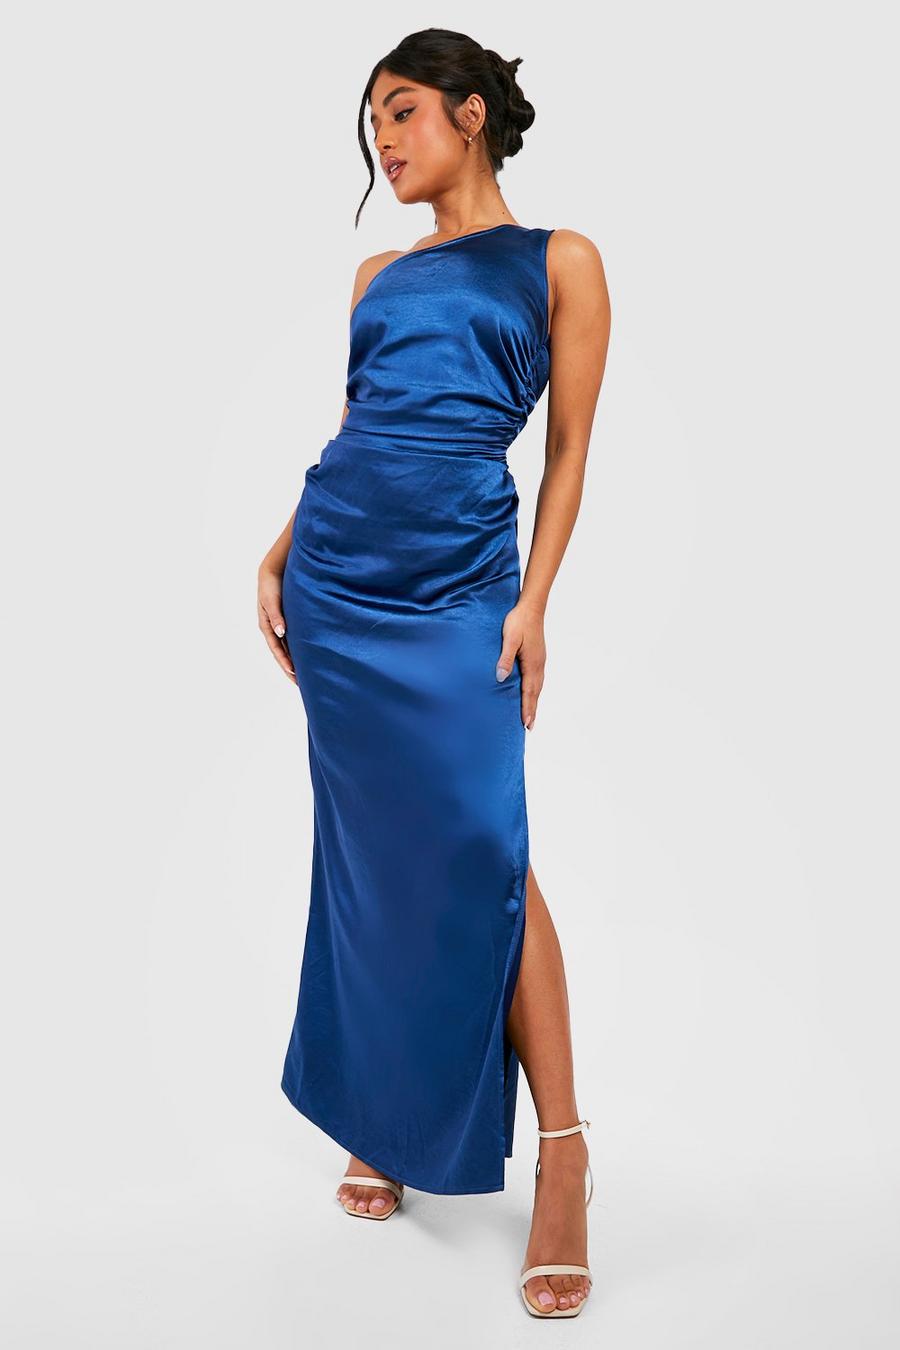 Petite Bridesmaid Satin One Shoulder Ruched Maxi Dress, Navy azul marino